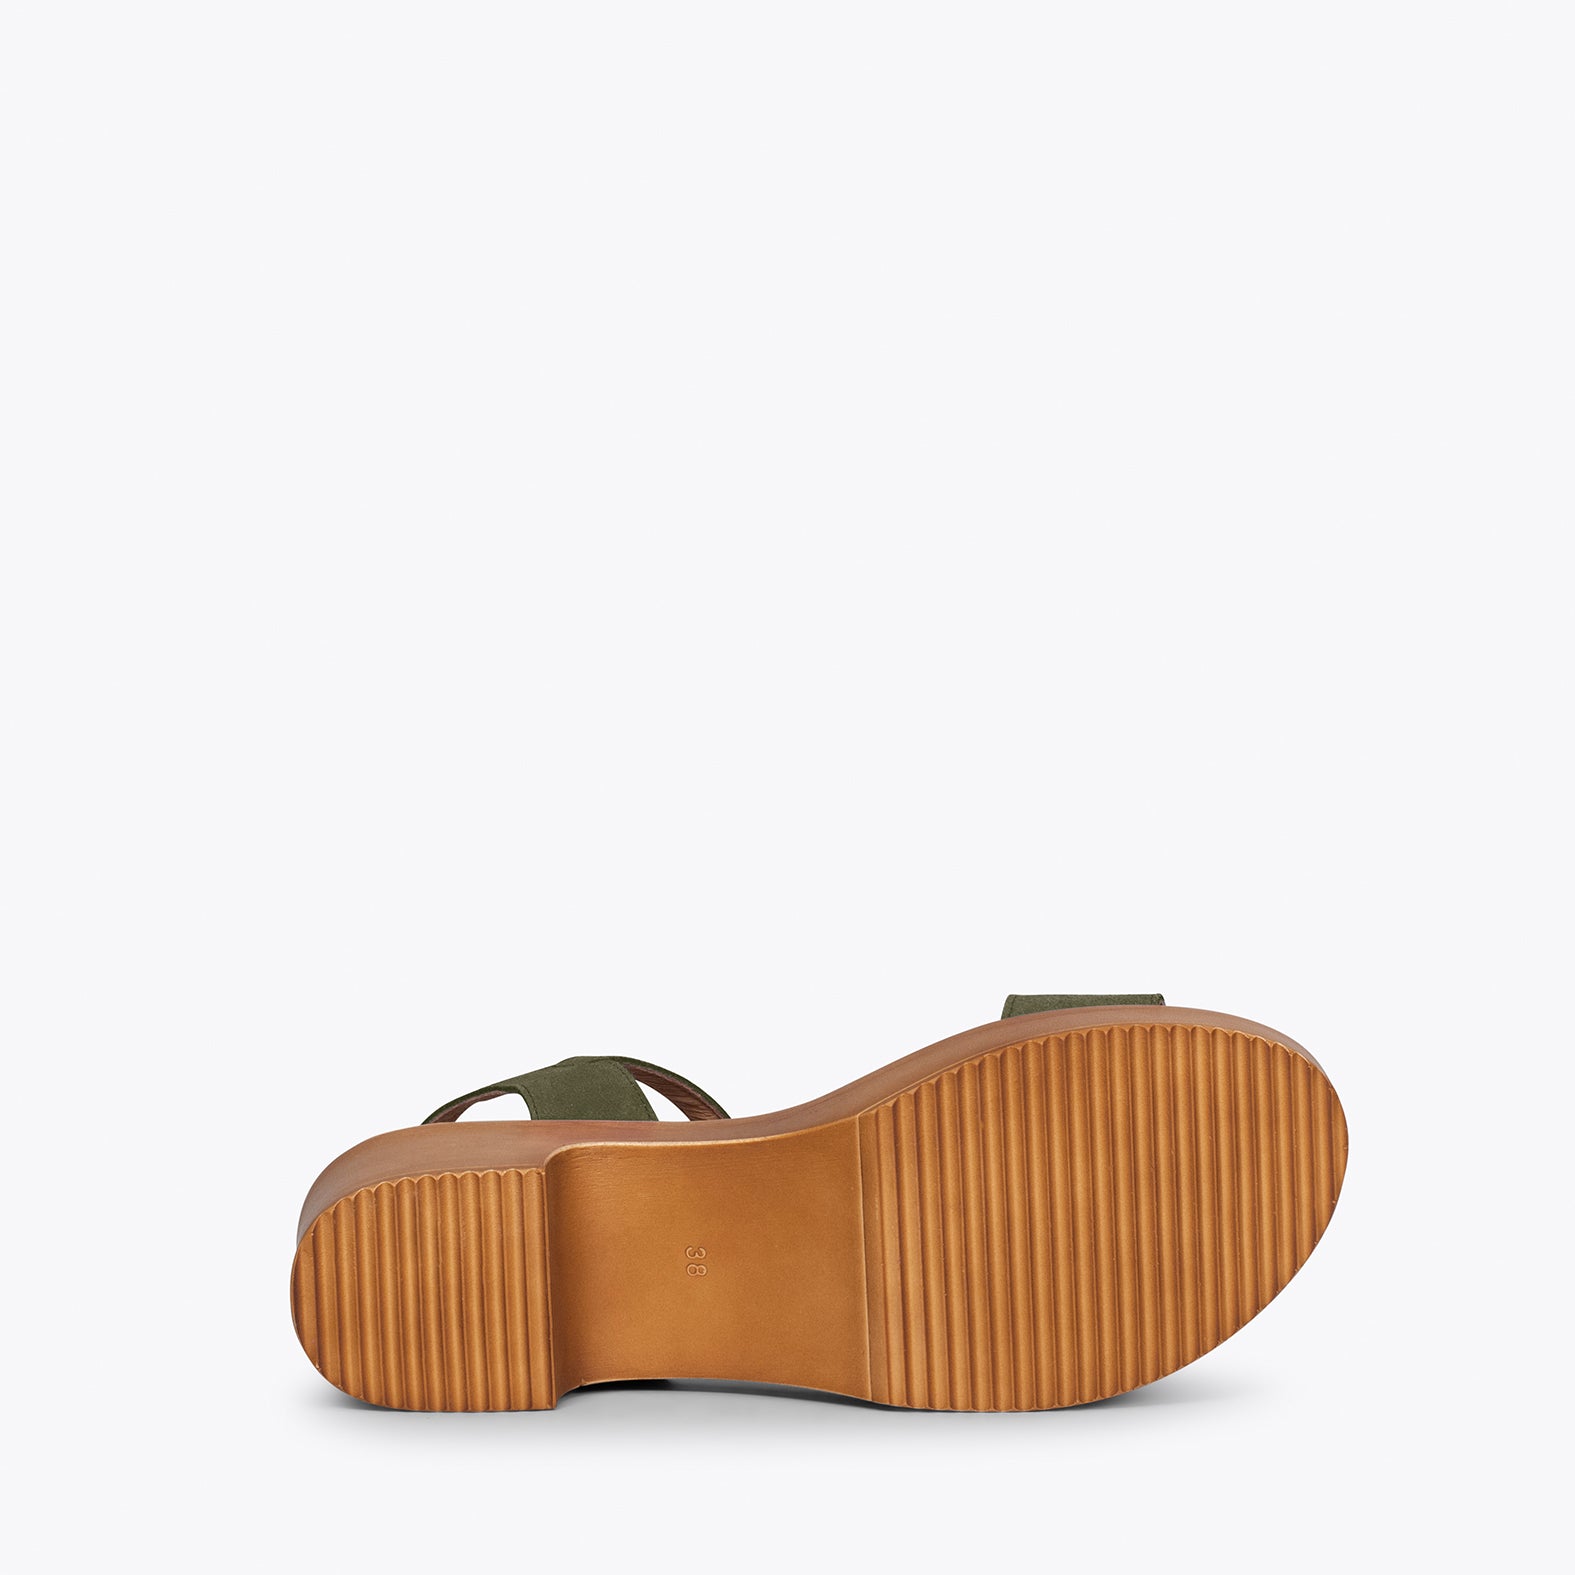 CALA – KHAKI sandals with platform